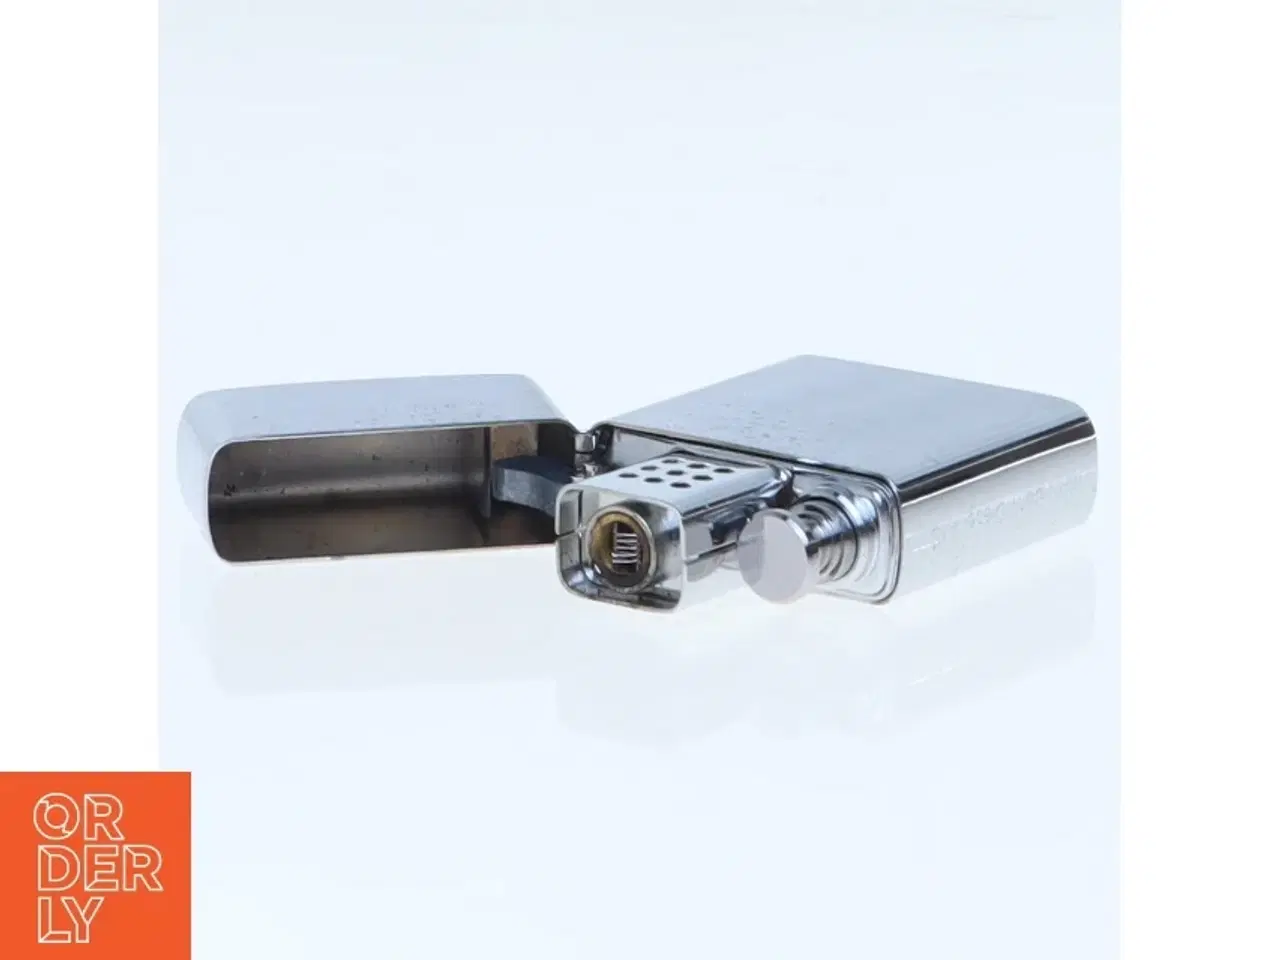 Billede 2 - Brugt Sølv Zippo Lighter fra Zippo (str. 5 komma 2 x 3 komma 3 x en cm)